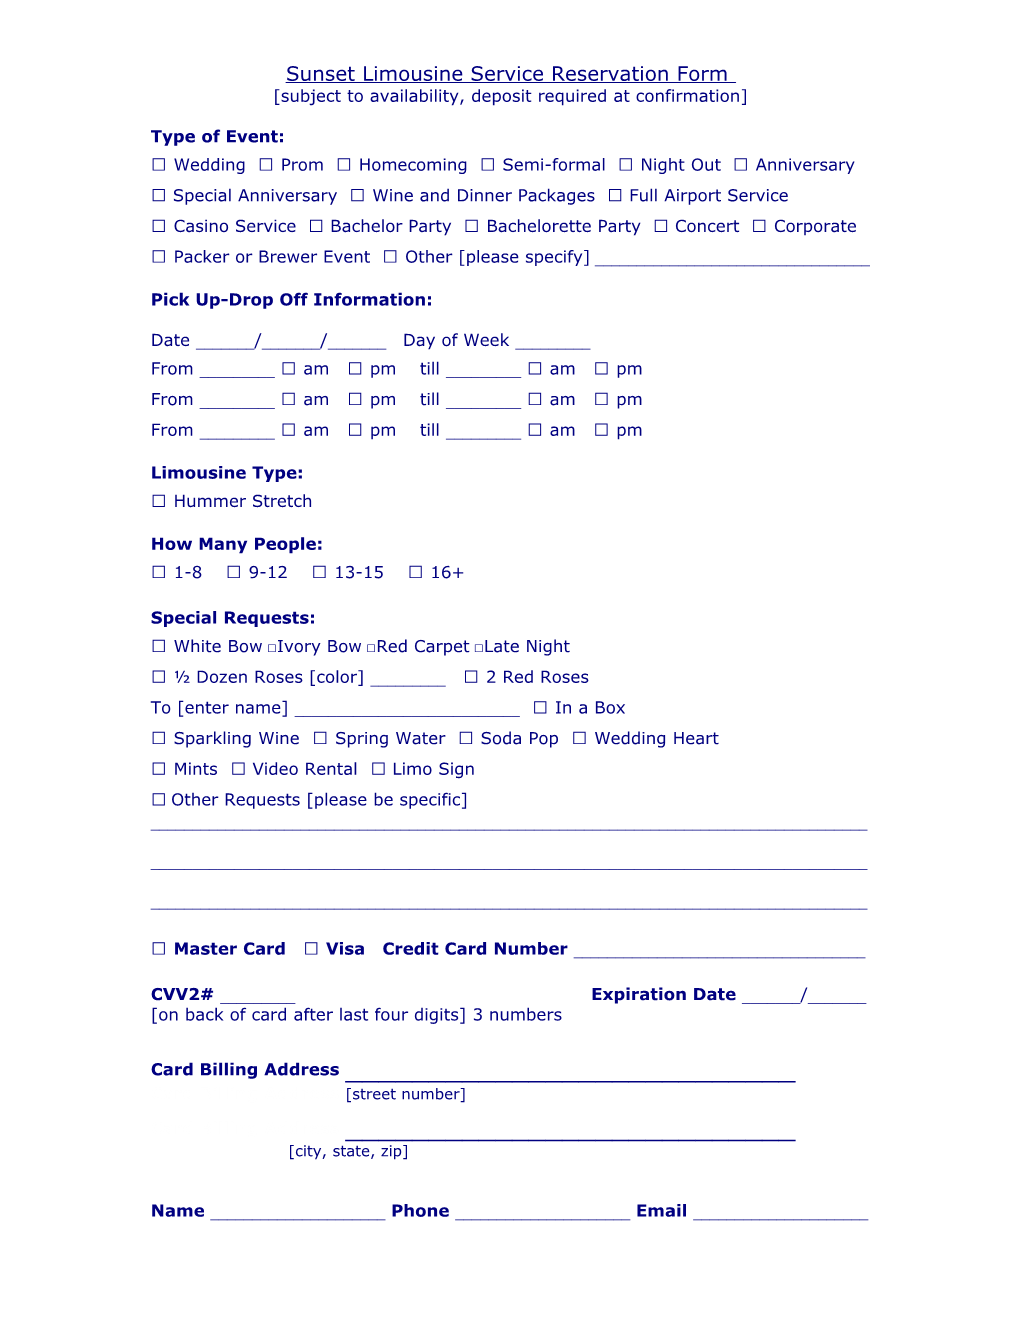 Sunset Limousine Service Reservation Form